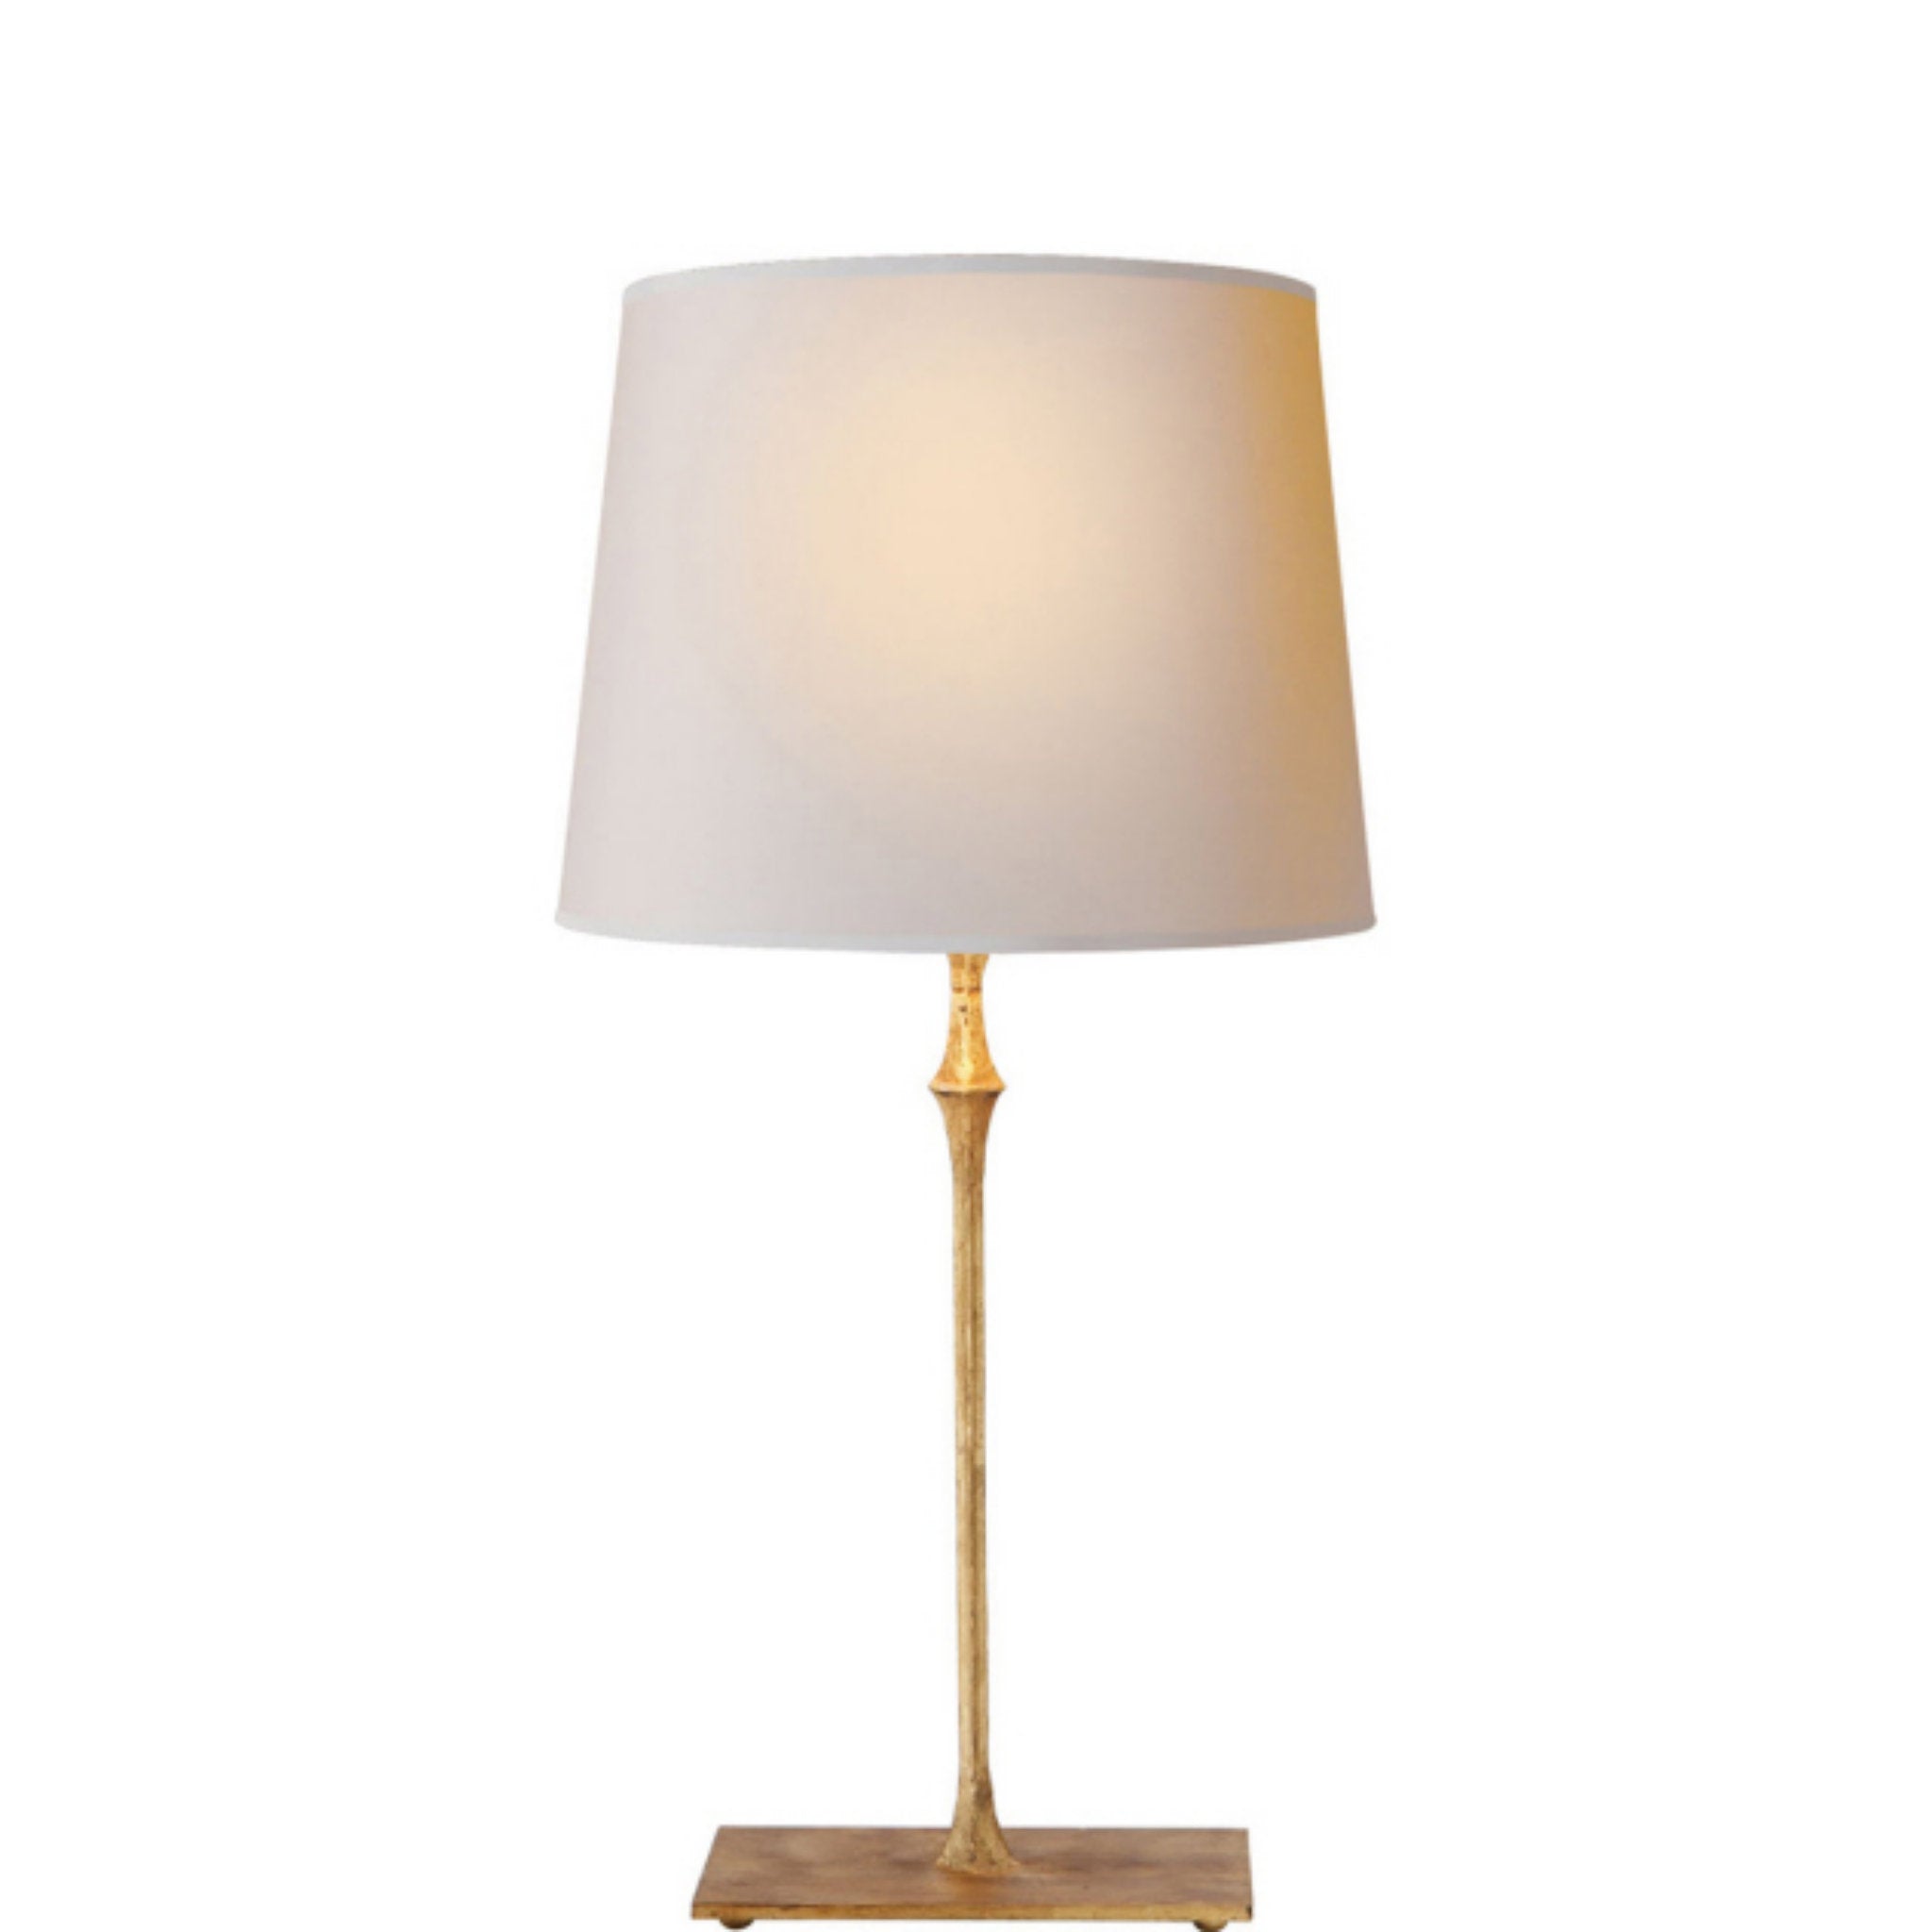 S1177HABL by Visual Comfort - Grenol Floor Lamp in Hand-Rubbed